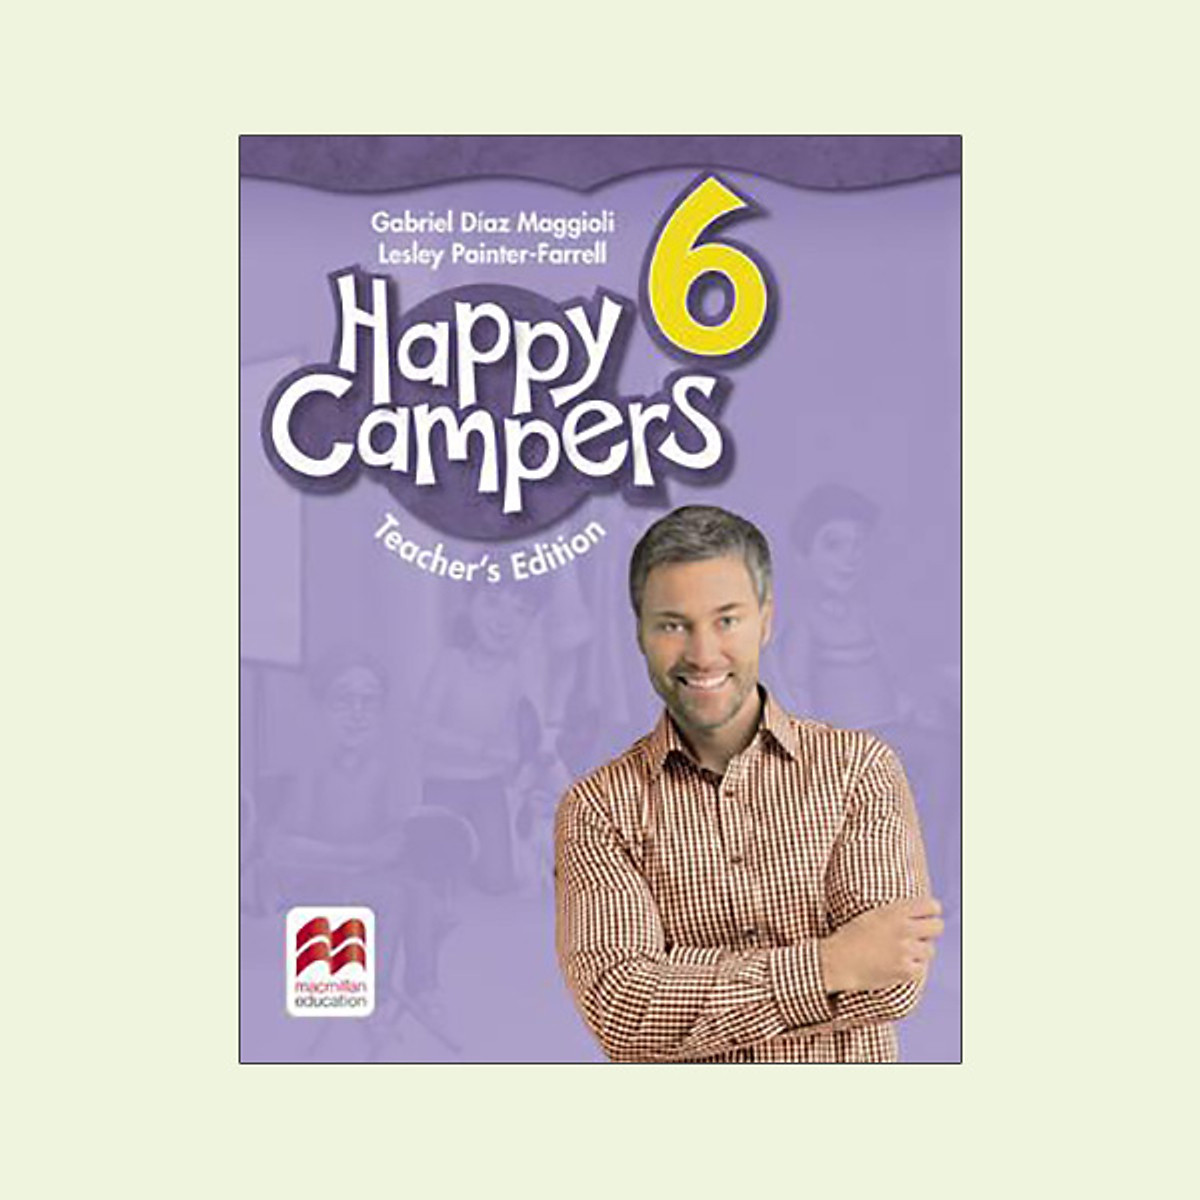 Nhà　Mua　tại　Level　Happy　Pack　Edition　Teacher's　Campers　Tiki　sách　Fahasa